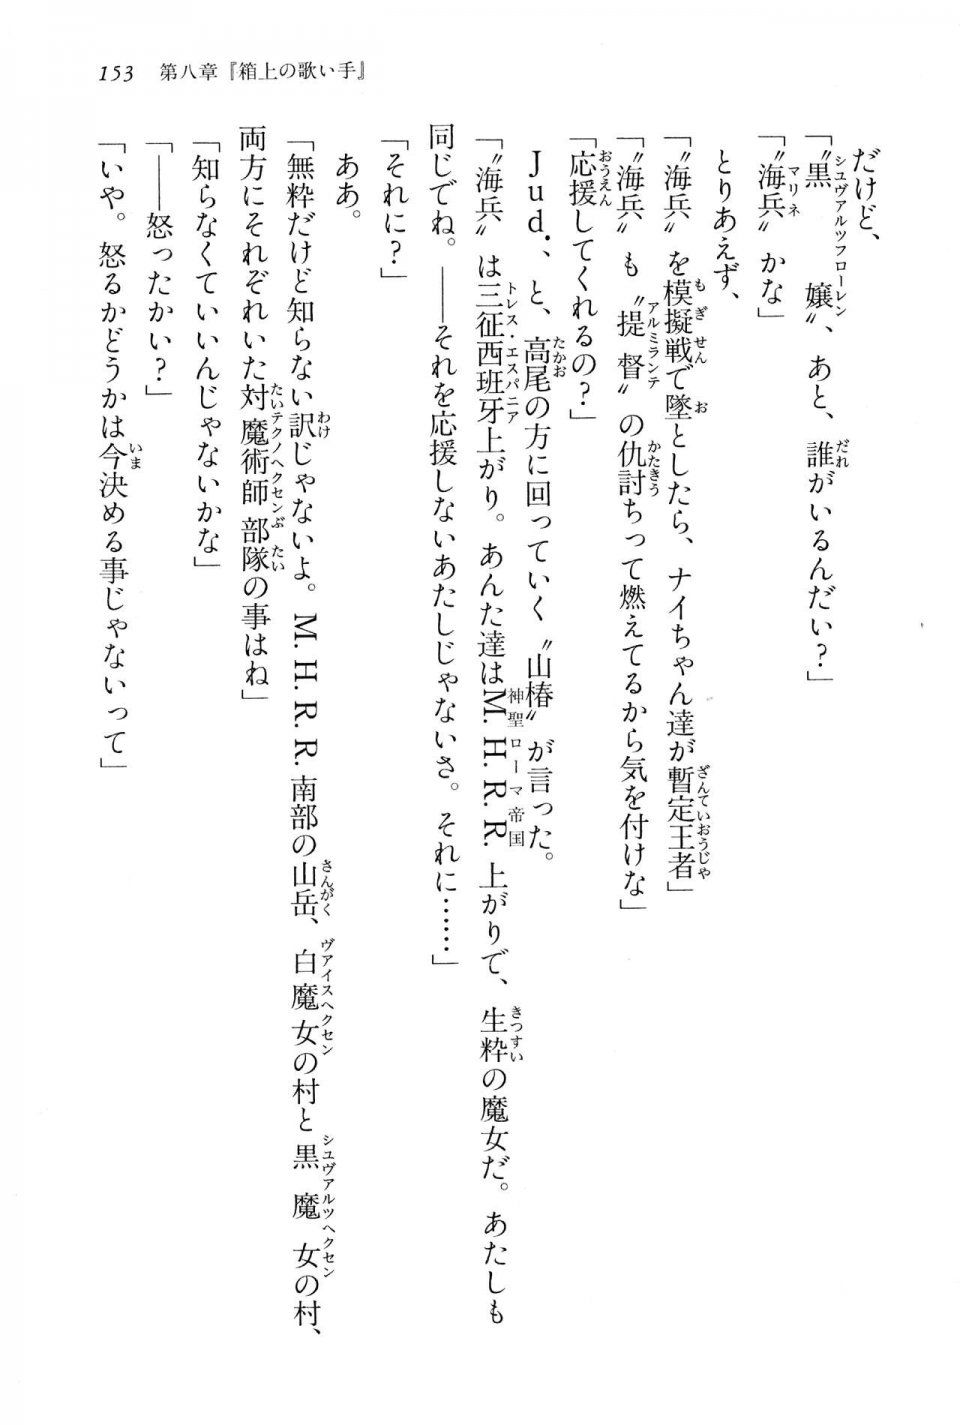 Kyoukai Senjou no Horizon BD Special Mininovel Vol 2(1B) - Photo #157